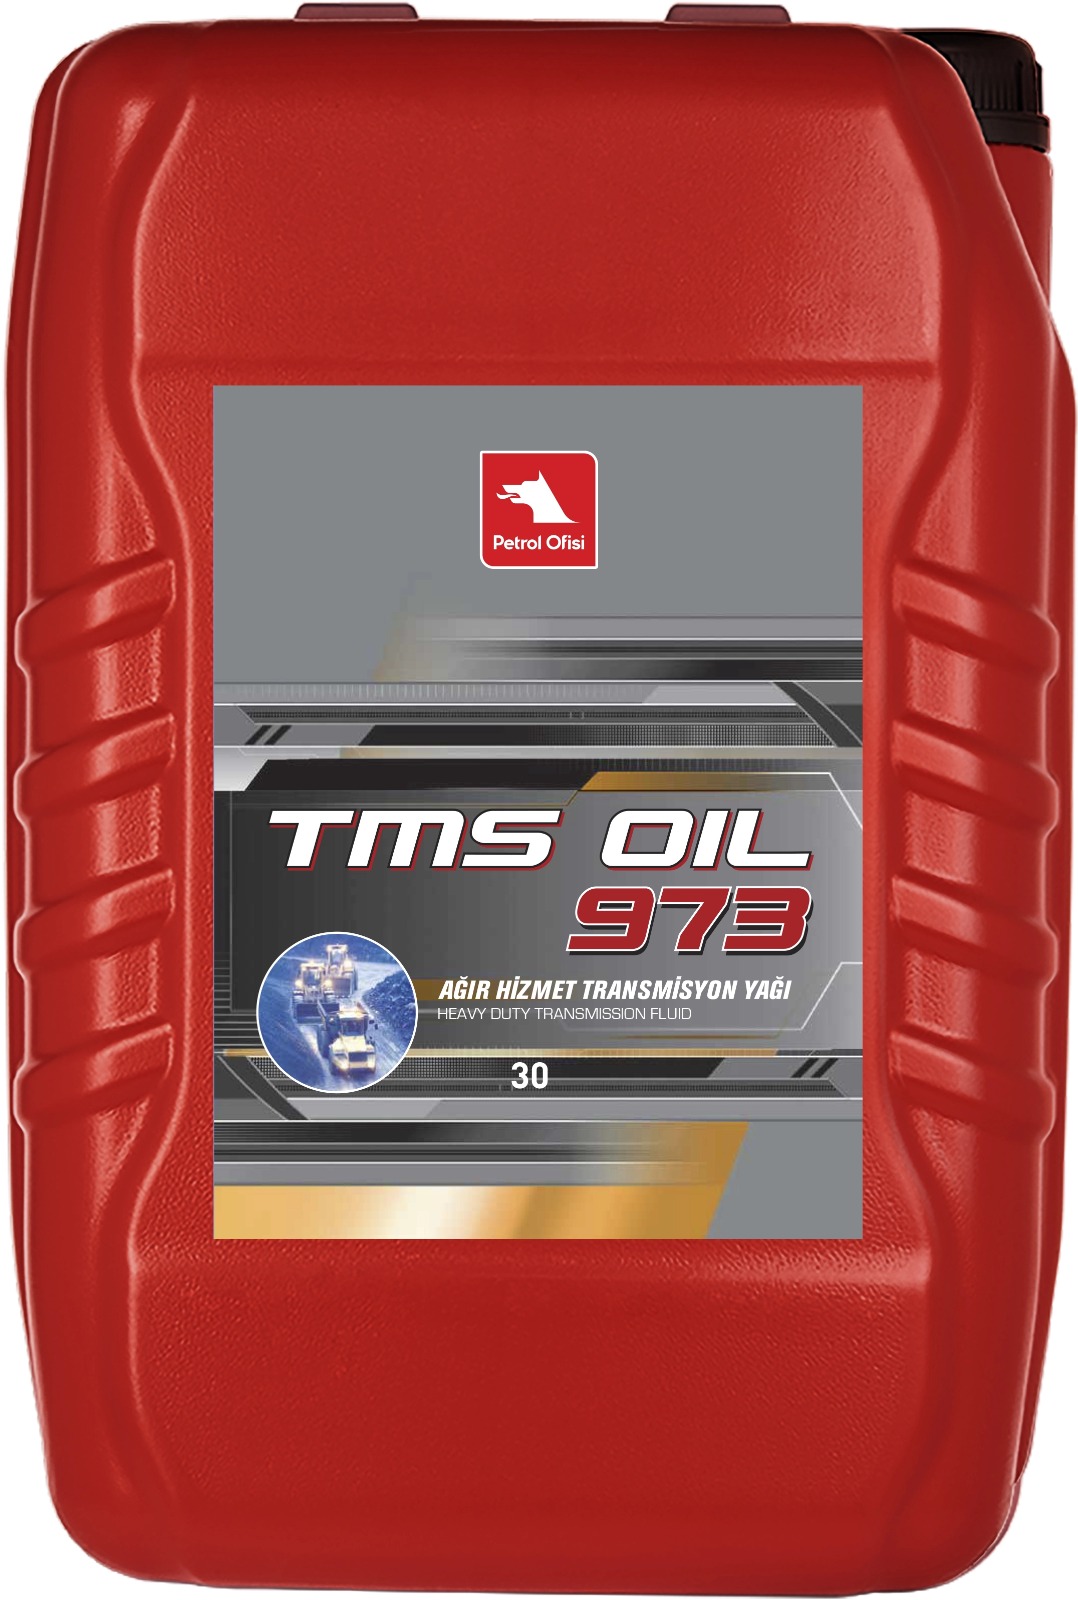 Petrol Ofisi Maxitrak TMS Oil 973 (17.5кг) Масло для спецтехники